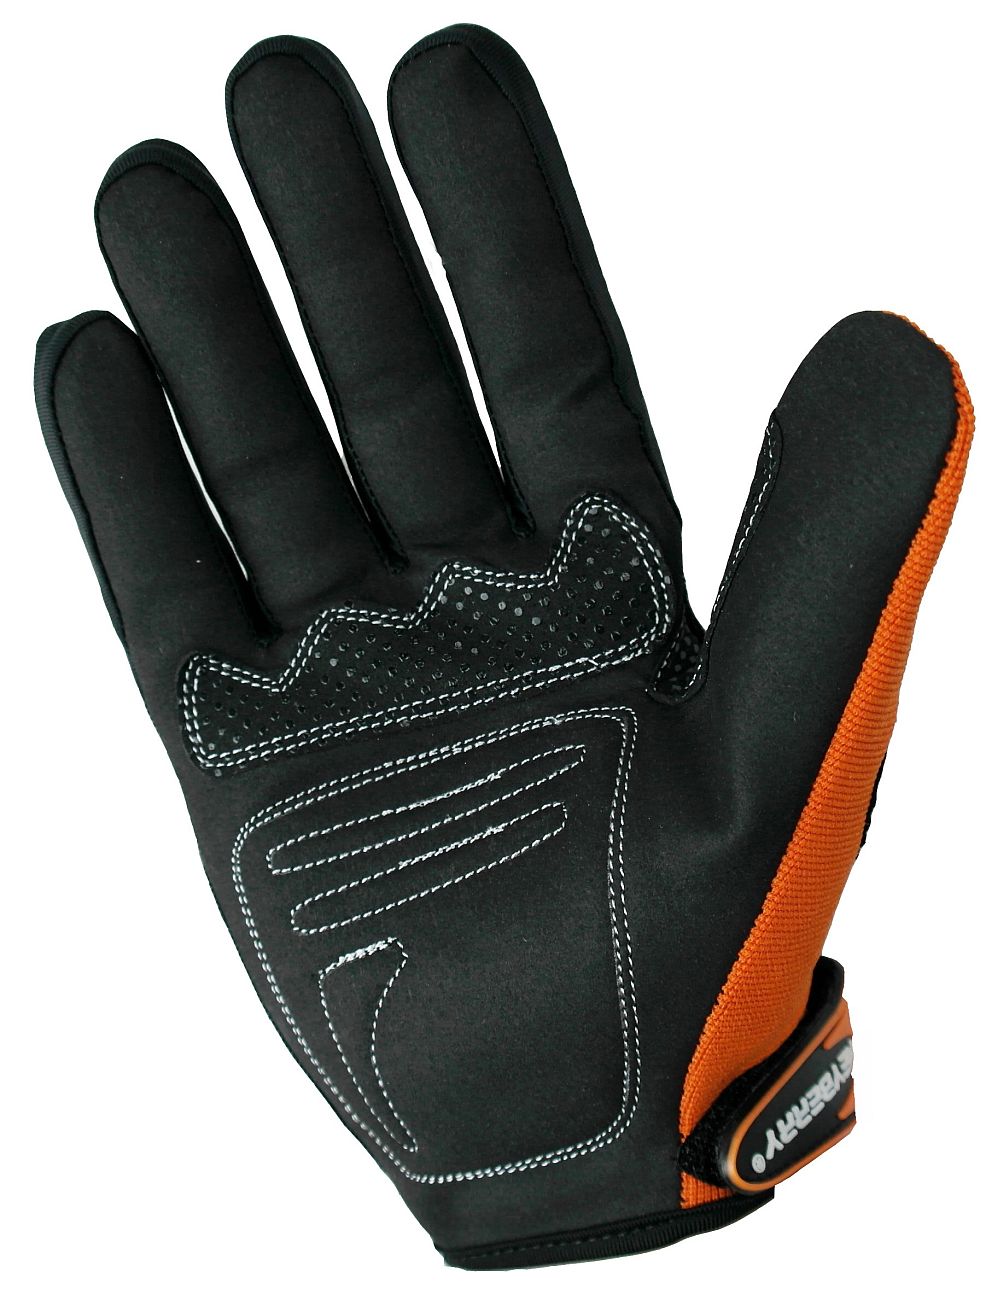 Heyberry Motocross MTB MX Handschuhe schwarz orange Gr. S - XXL